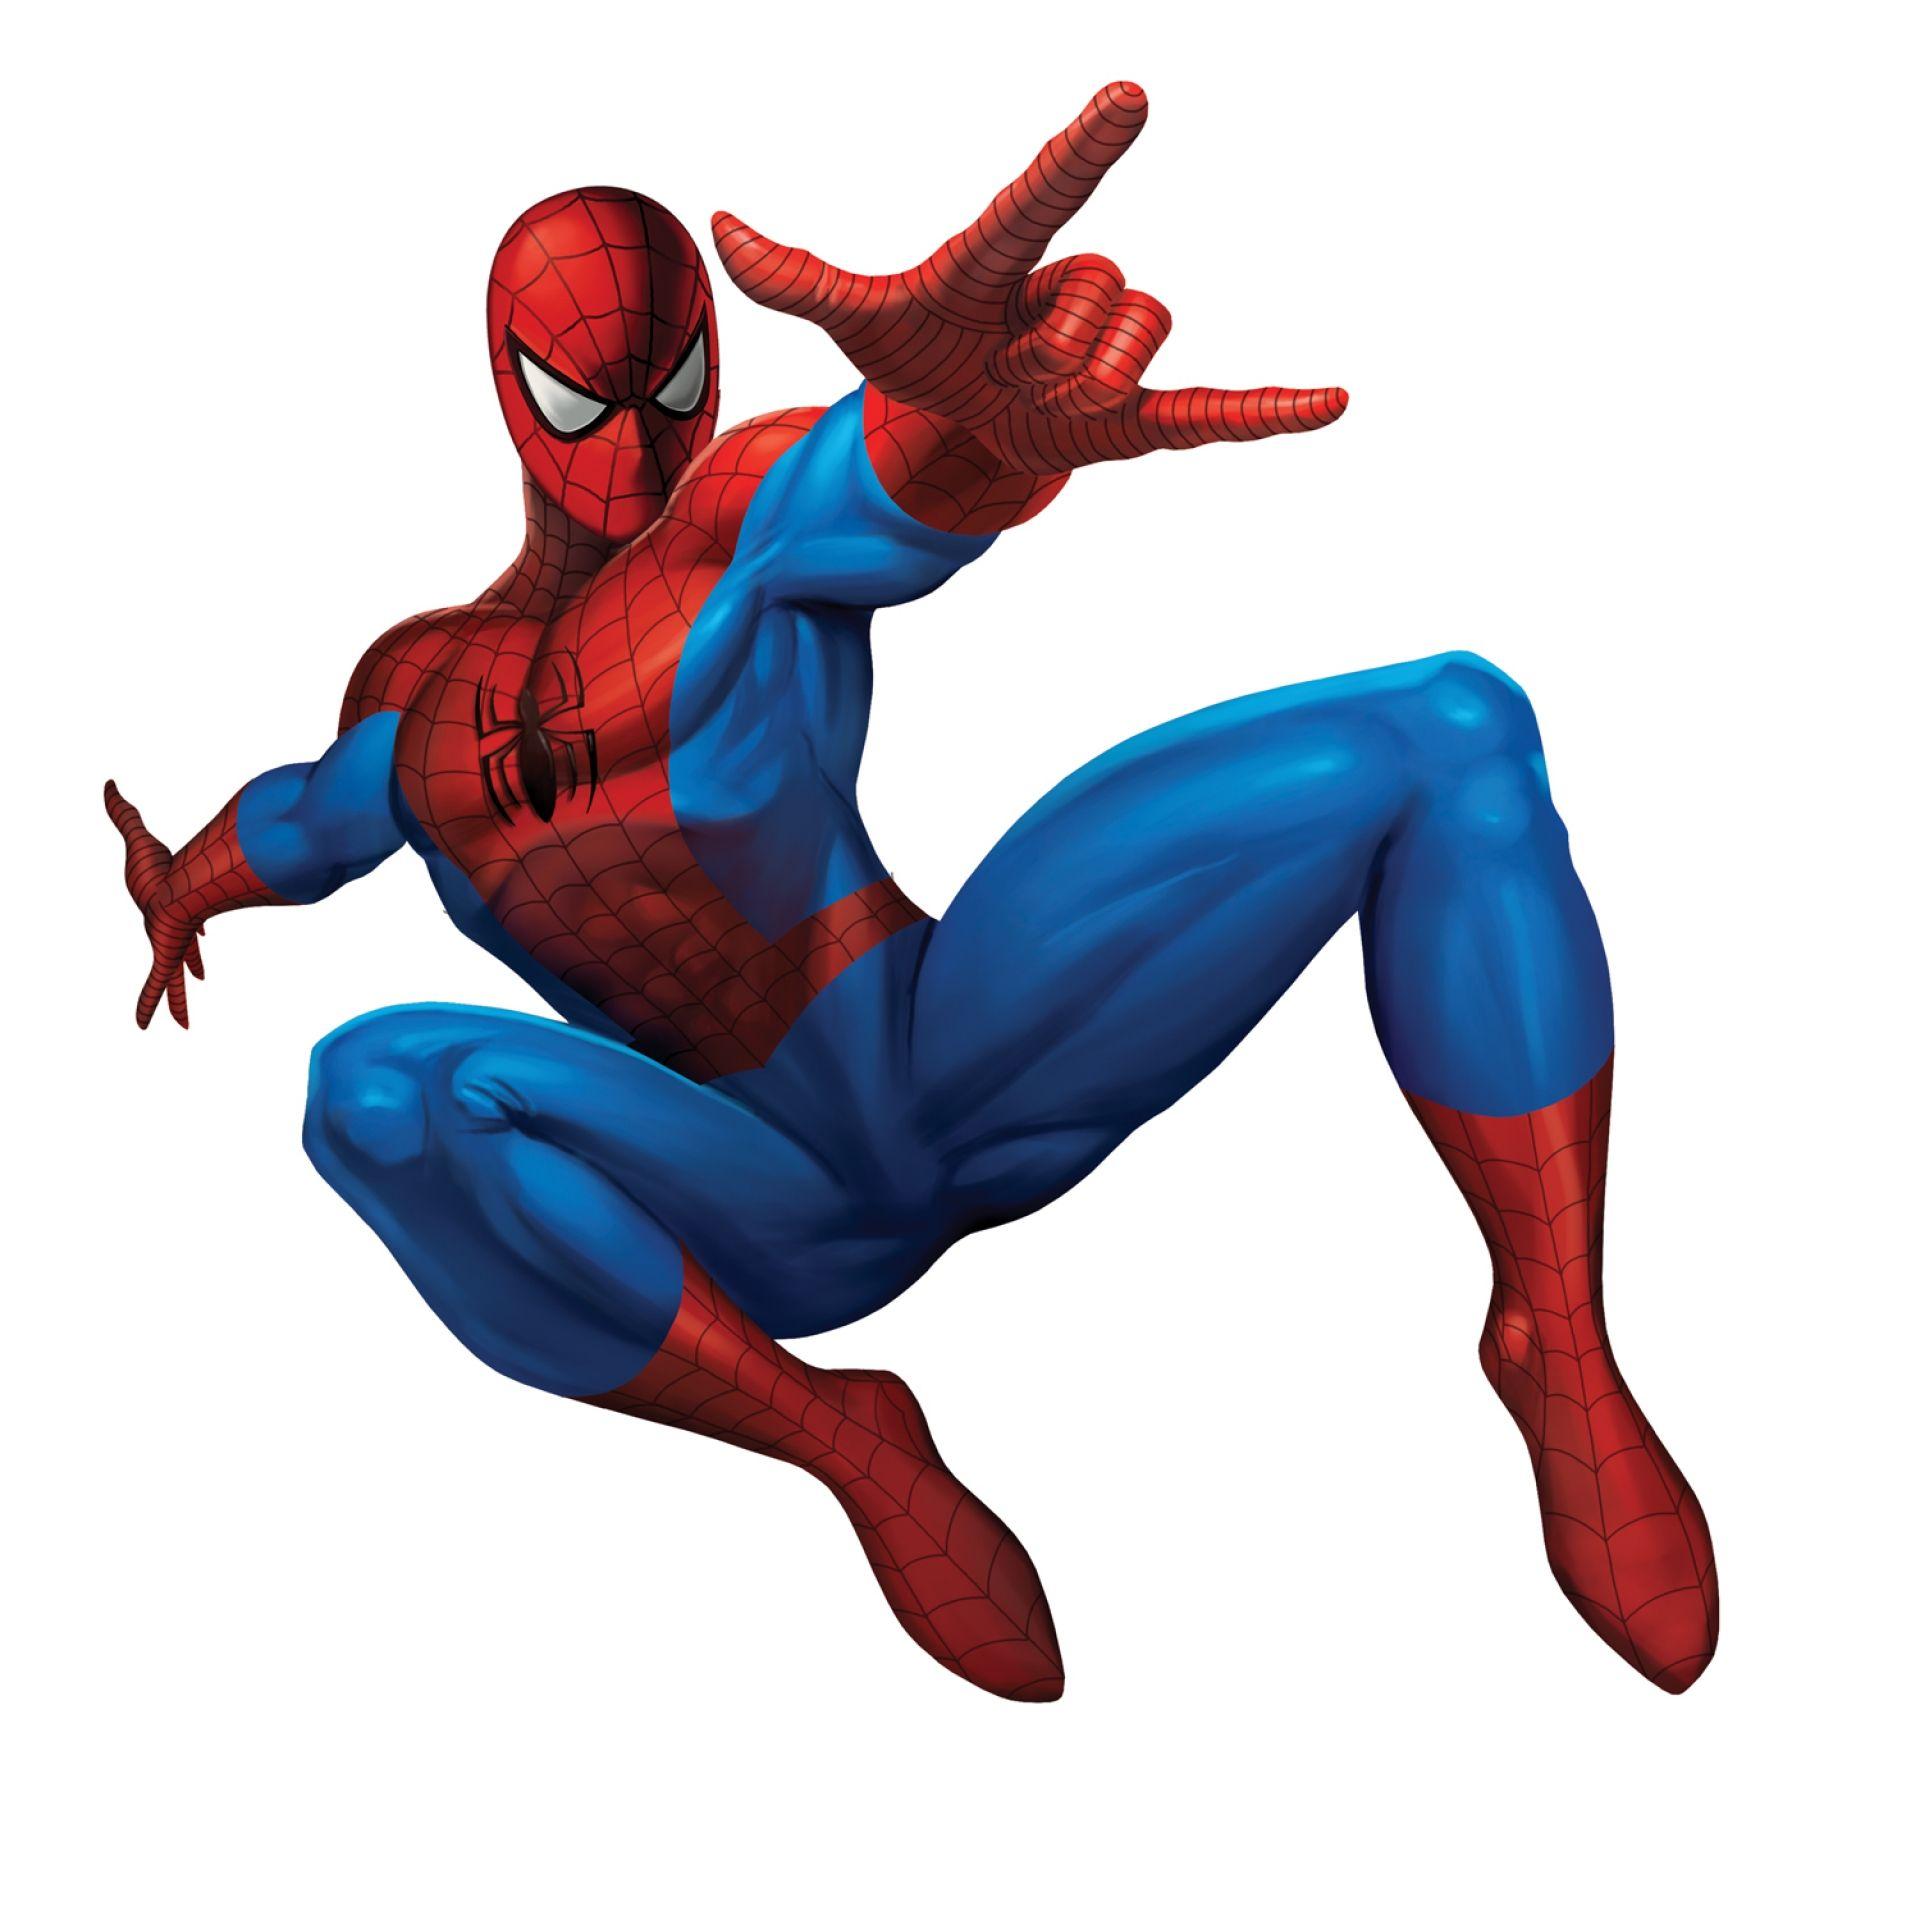 Spiderman Cartoon Image 20745 HD Wallpaper Widescreen in Movies